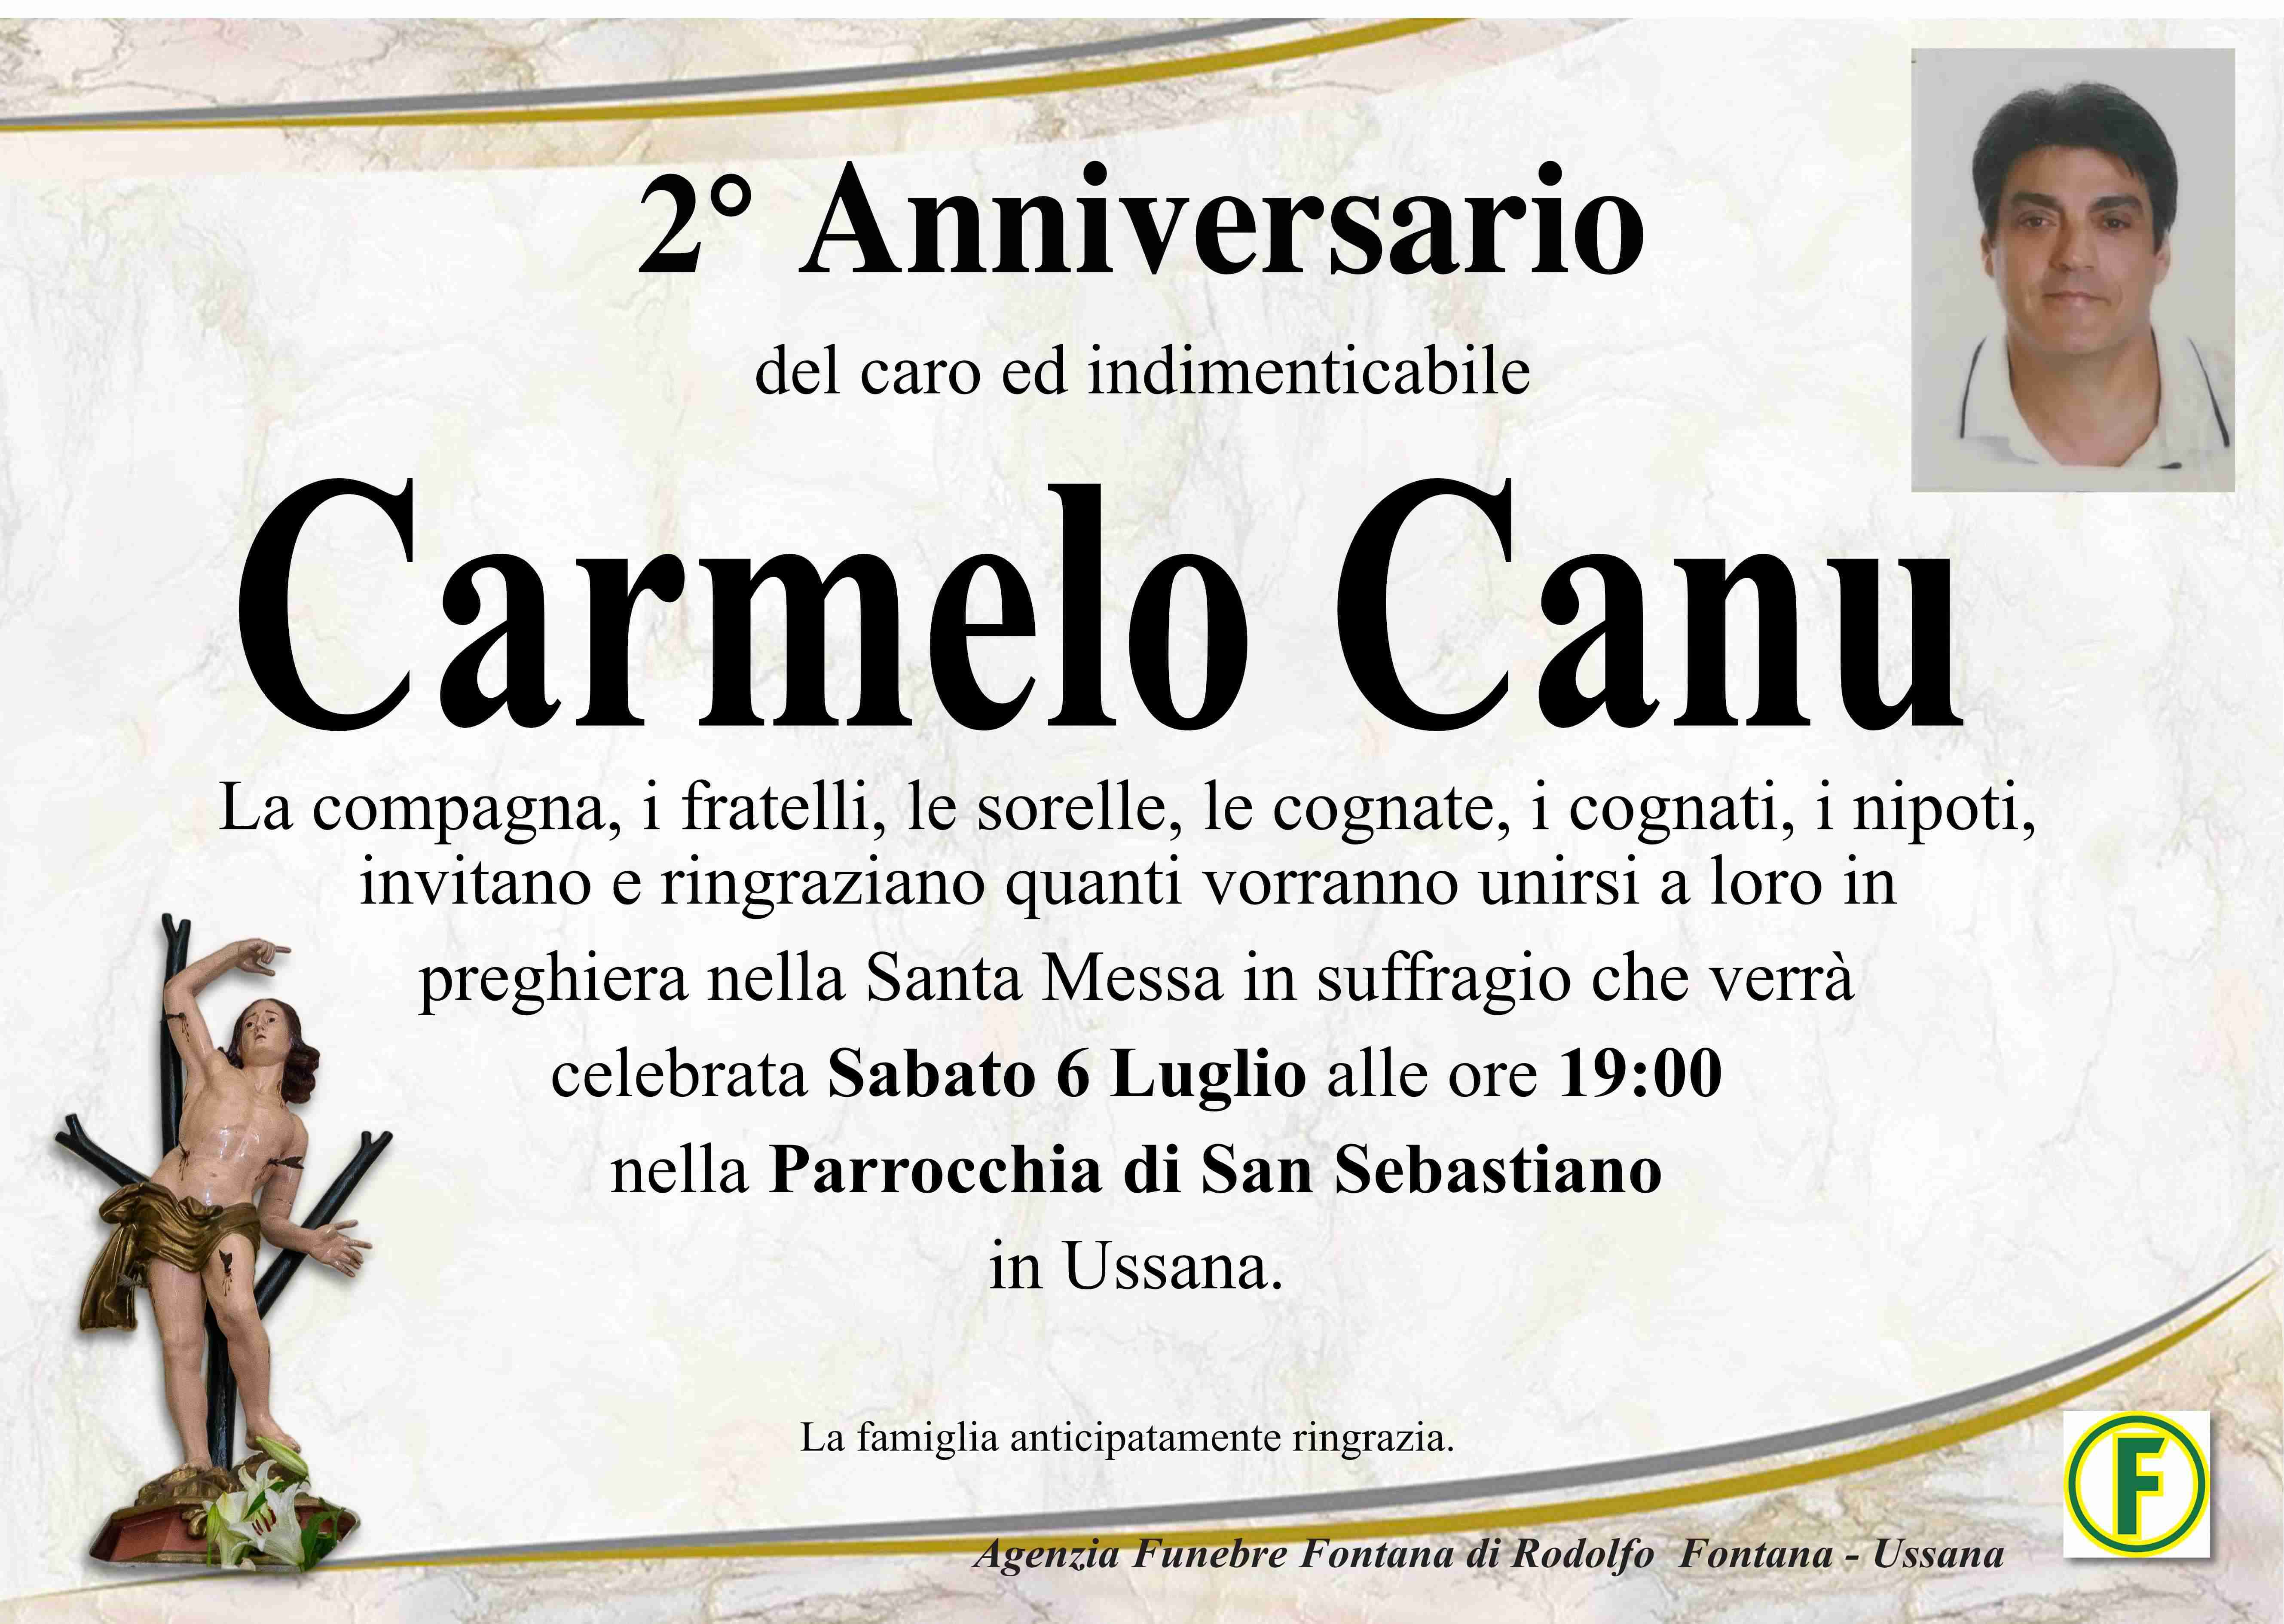 Carmelo Canu